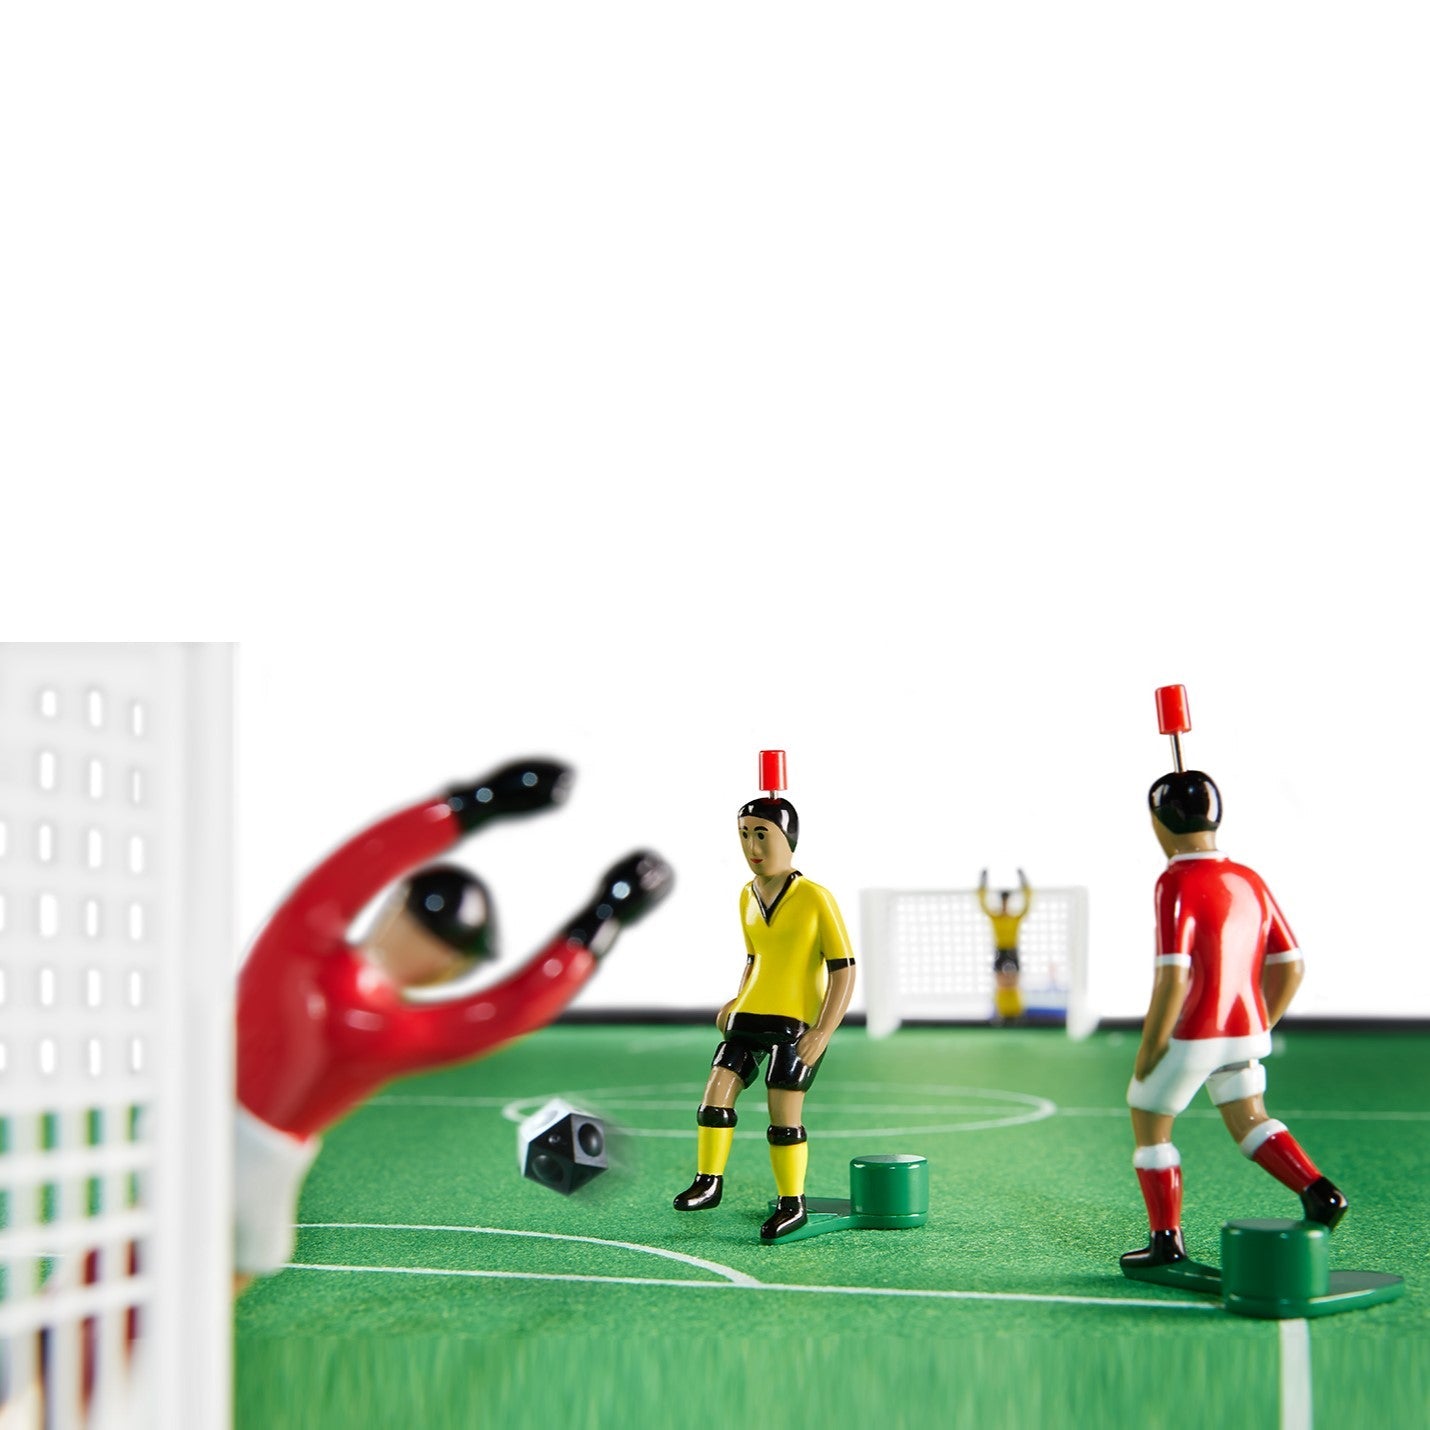 TIPP-KICK CLASSIC Soccer Game: Mini Players, Goals, Ball, Pitch 79x48cm